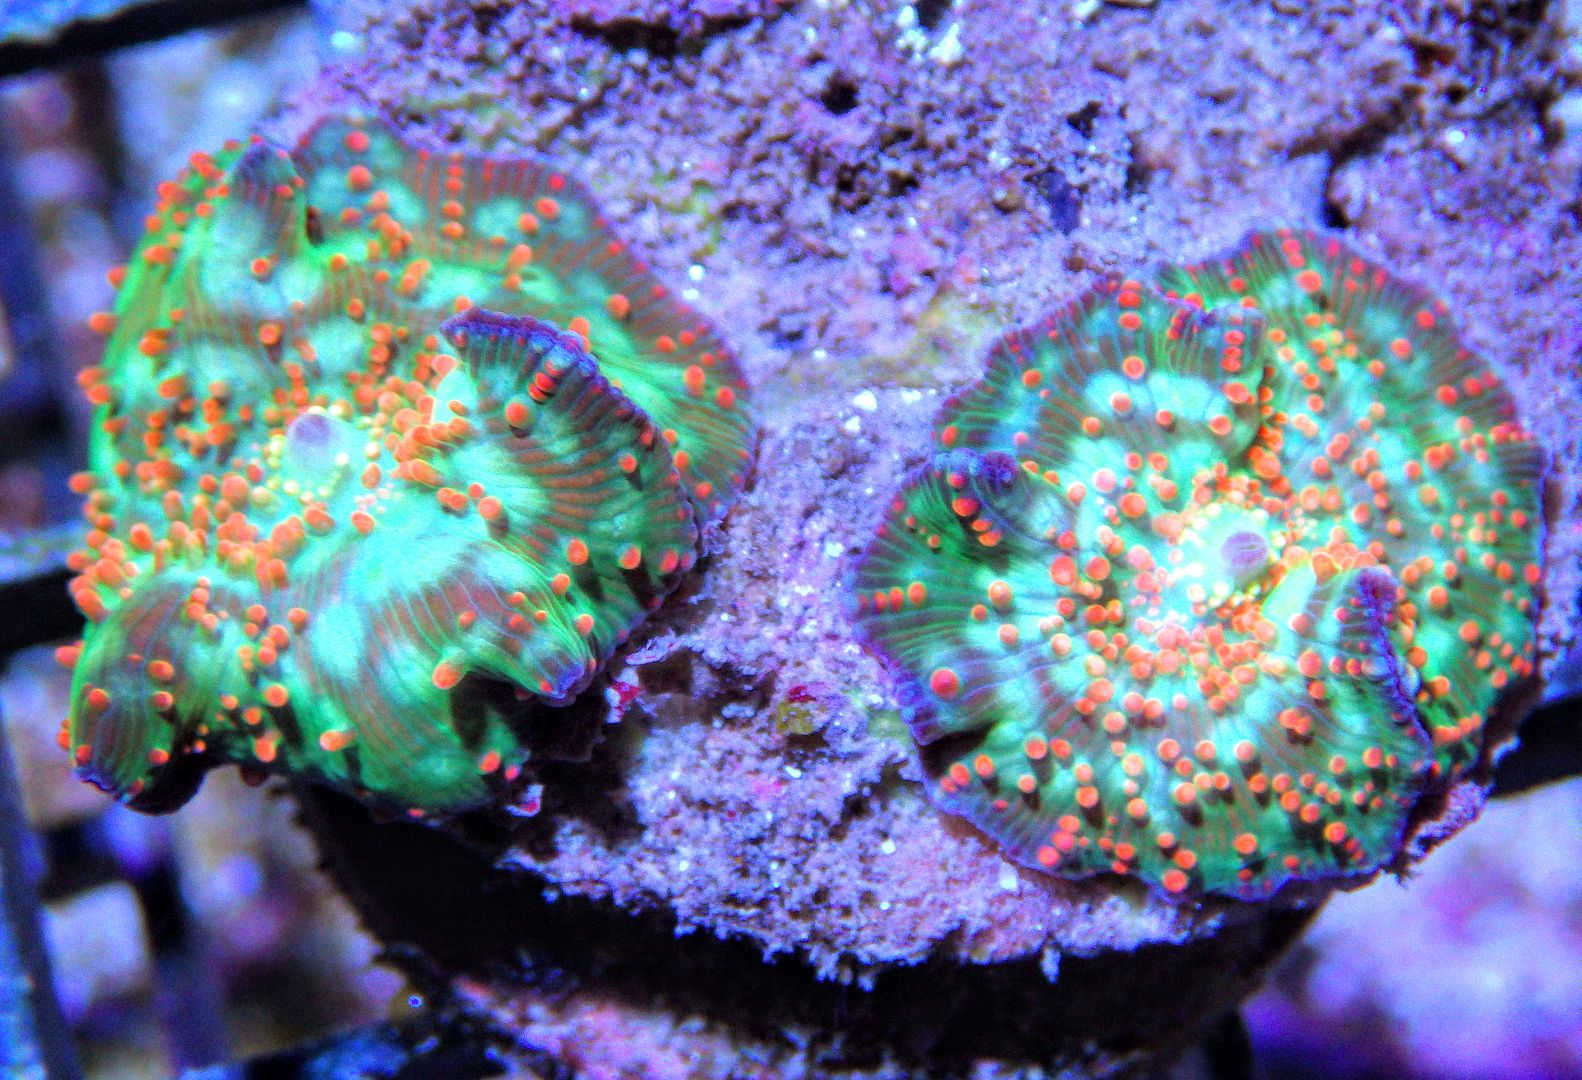 RIMG85993 zpspyc5kzvu - New Mushrooms & Pieces of The Reef